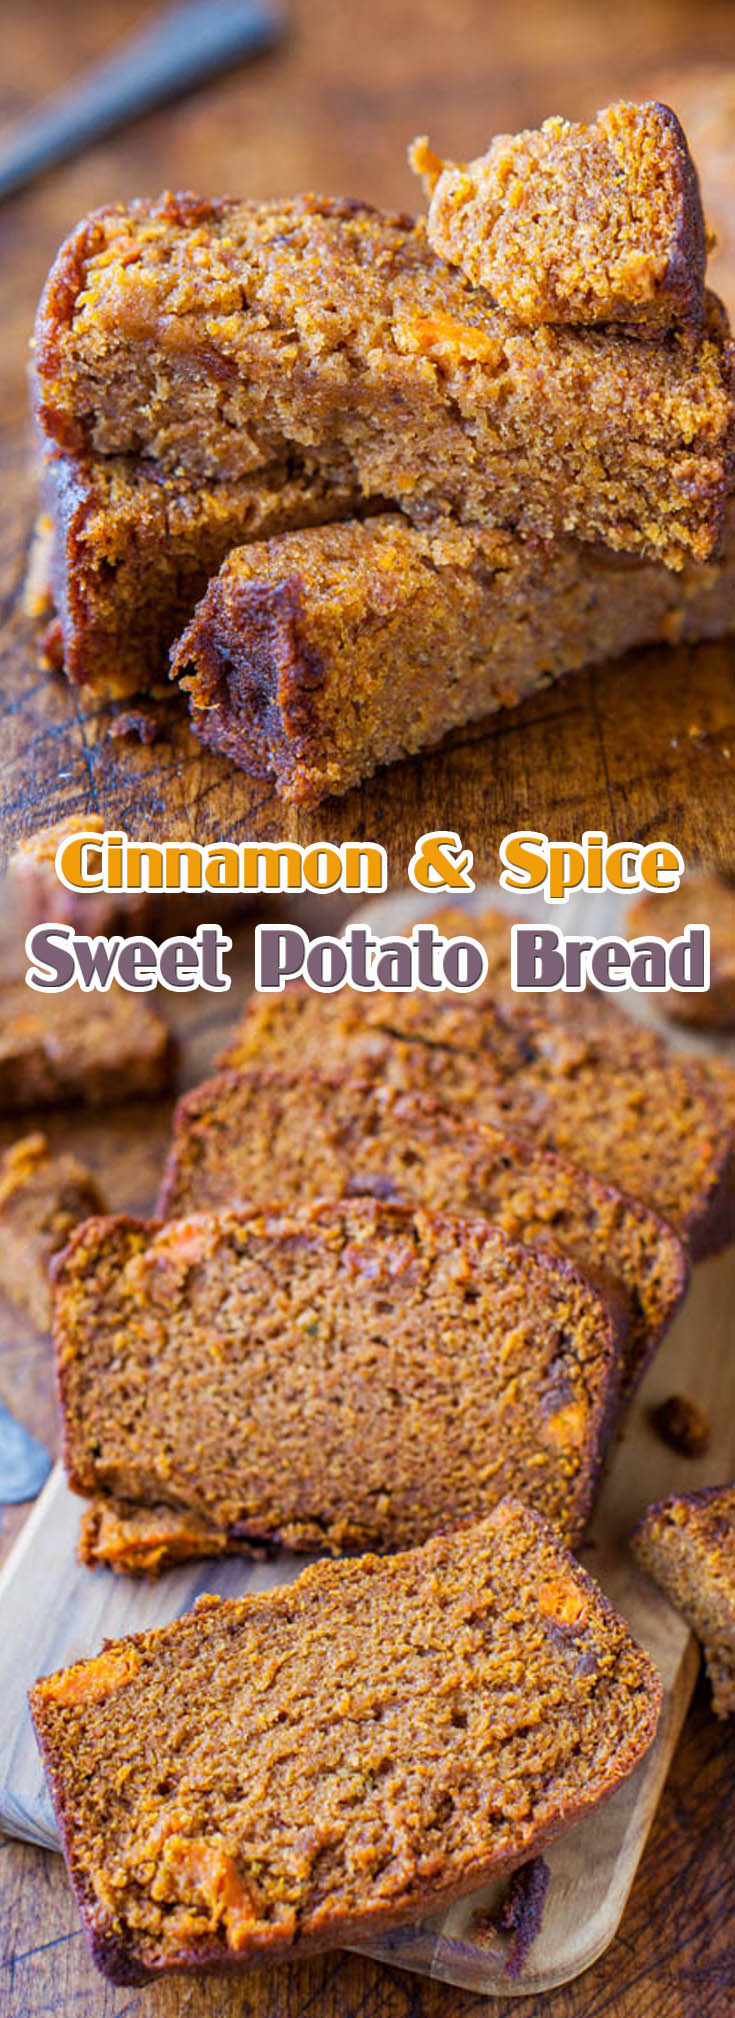 Cinnamon & Spice Sweet Potato Bread